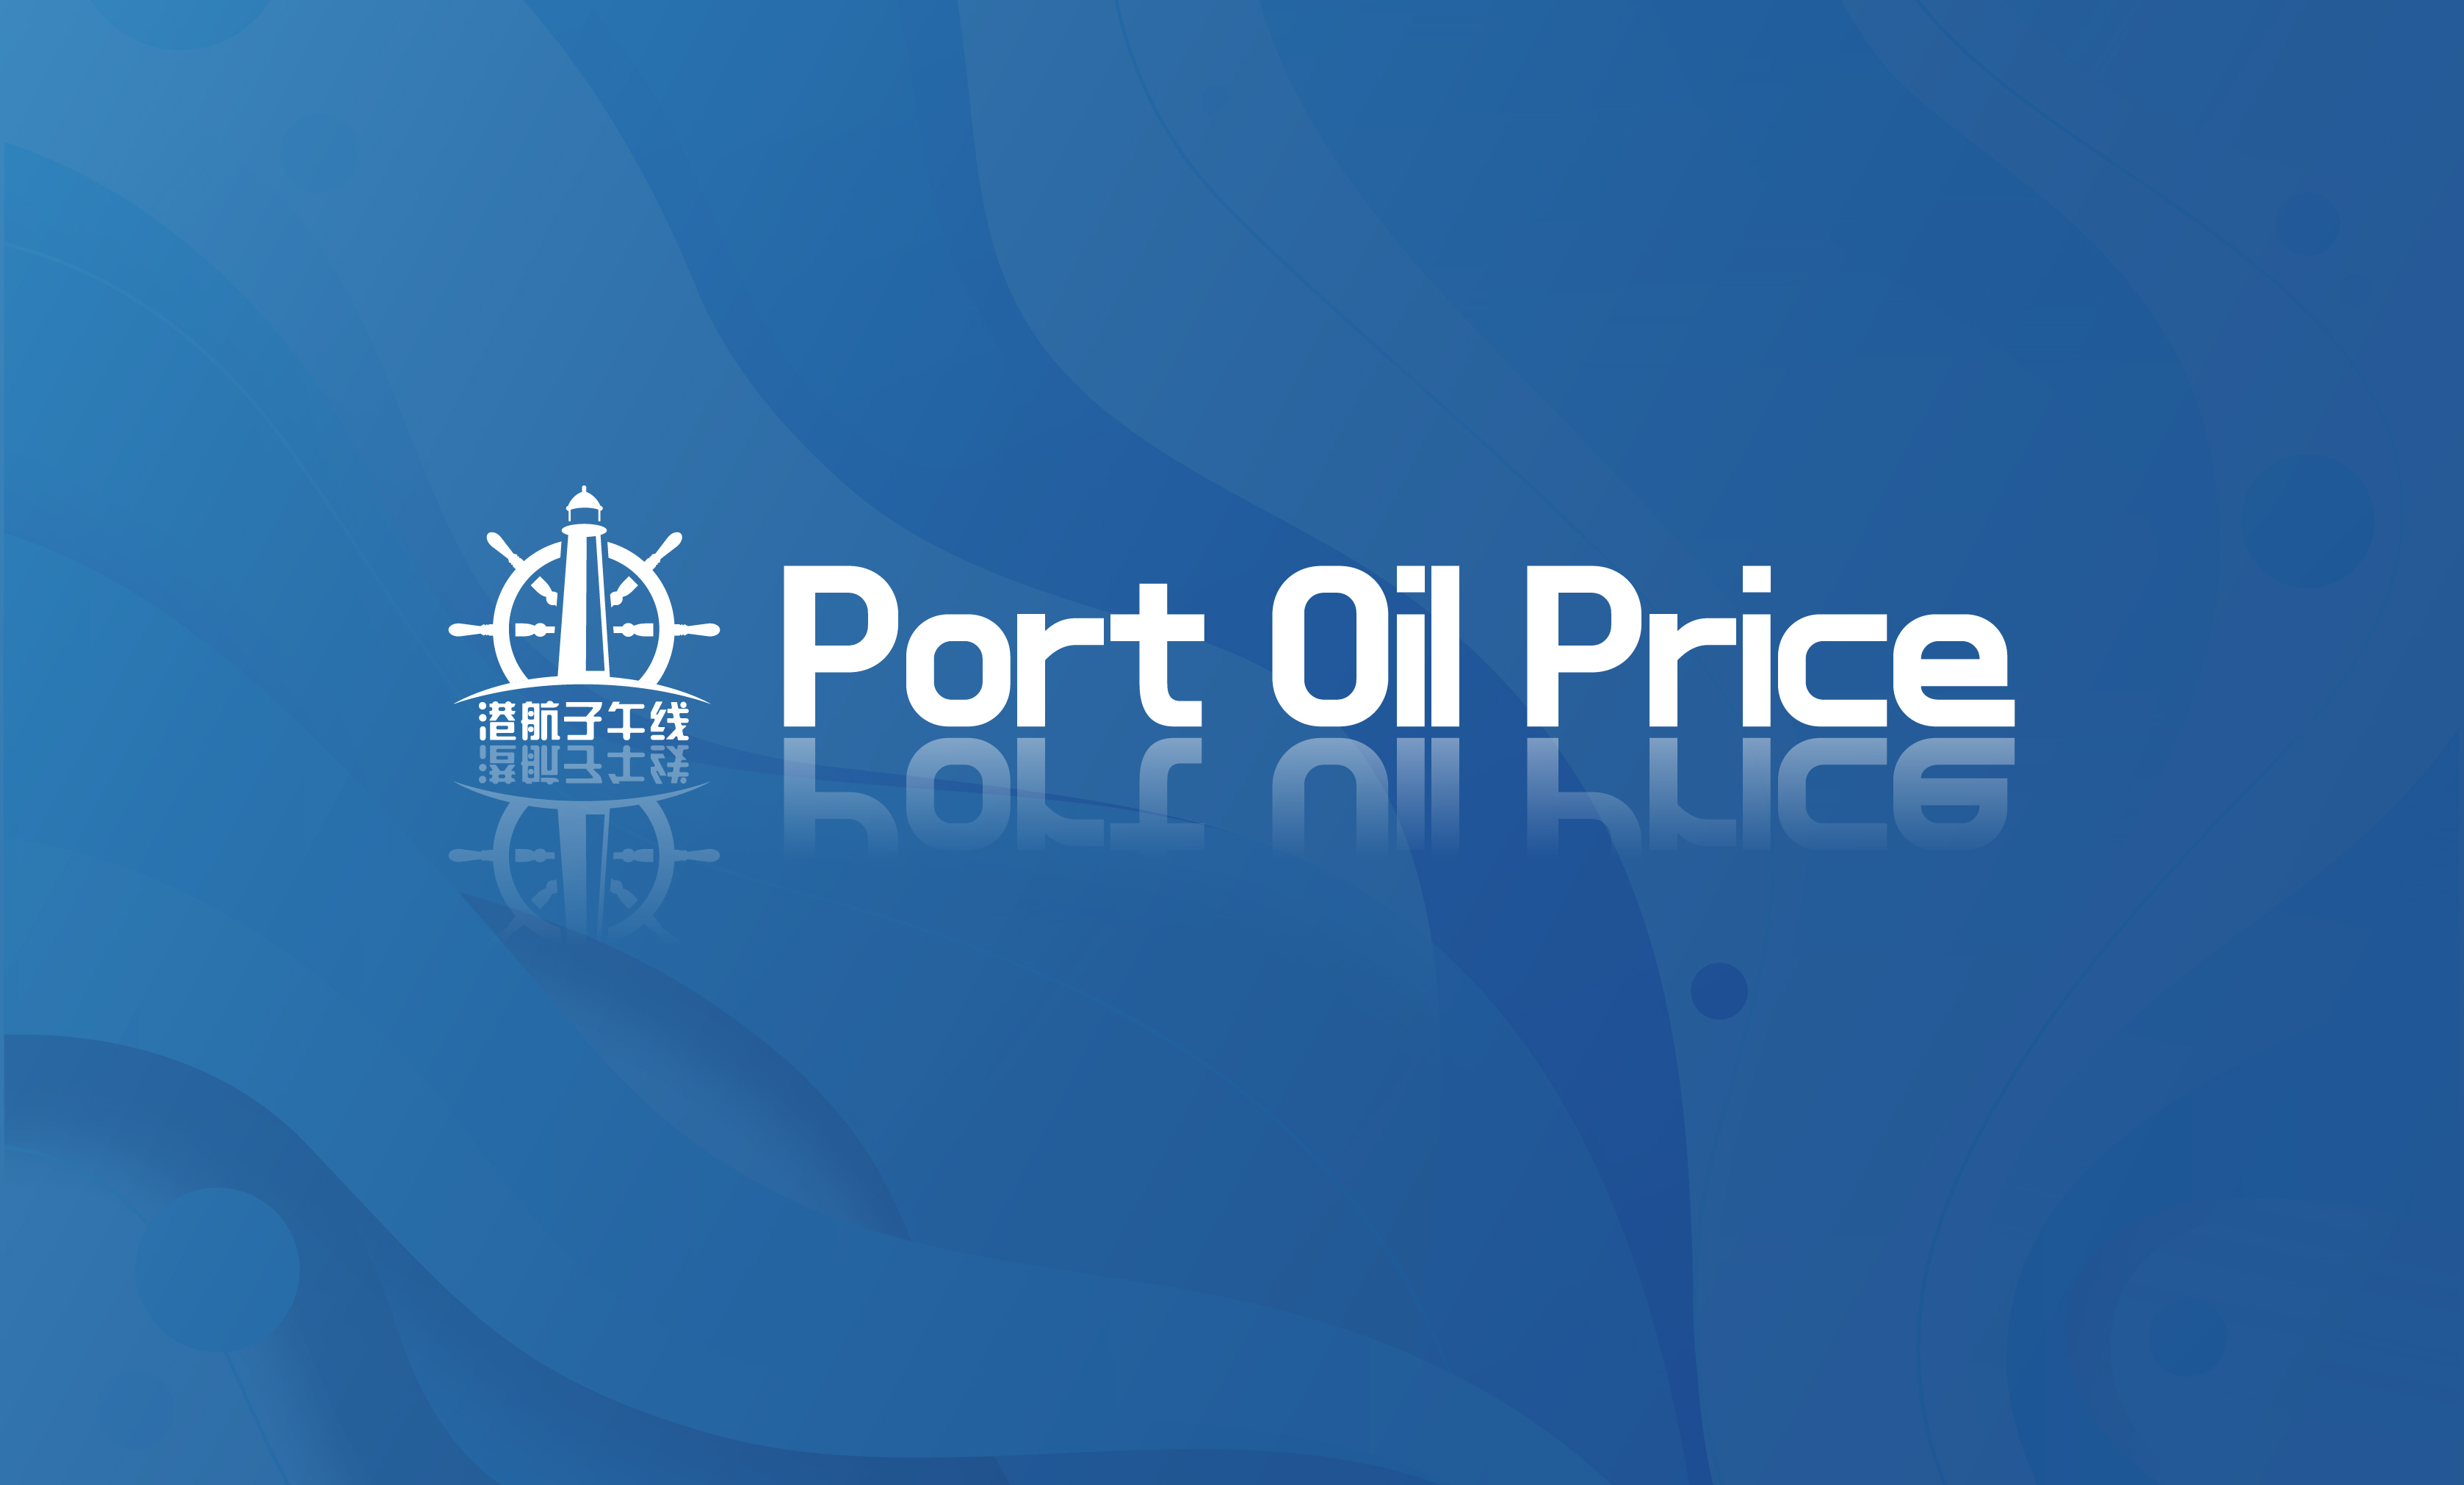 7/26 Oil Price for Global Popular Ports